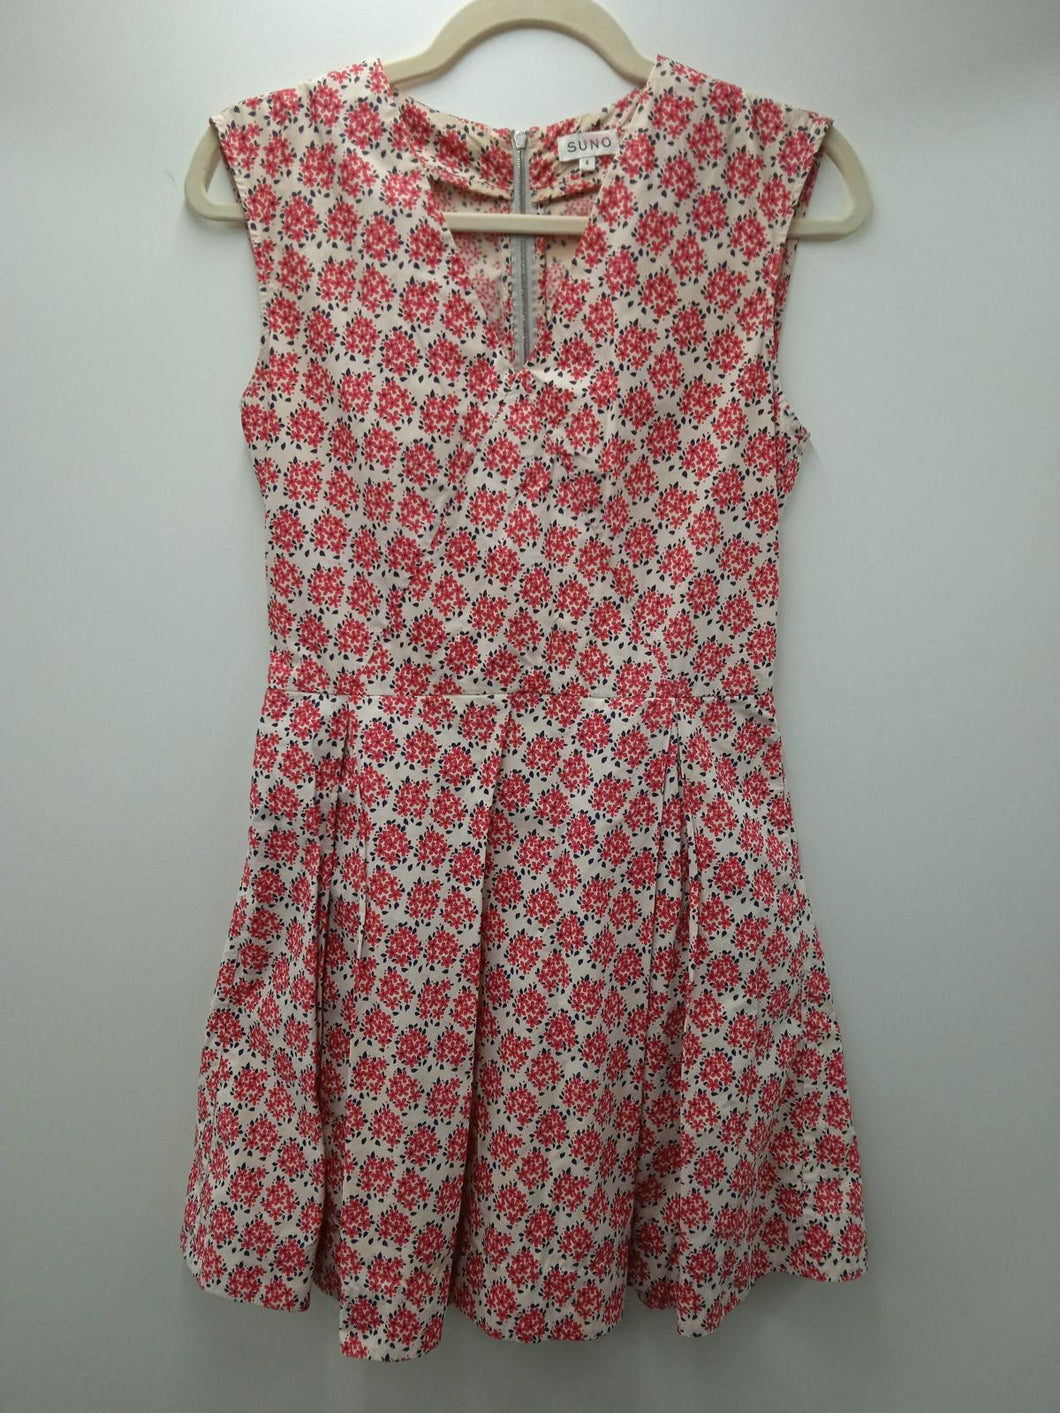 SUNO Ladies Beige & Pink Floral Print Sleeveless Fit & Flare Dress US4 UK8